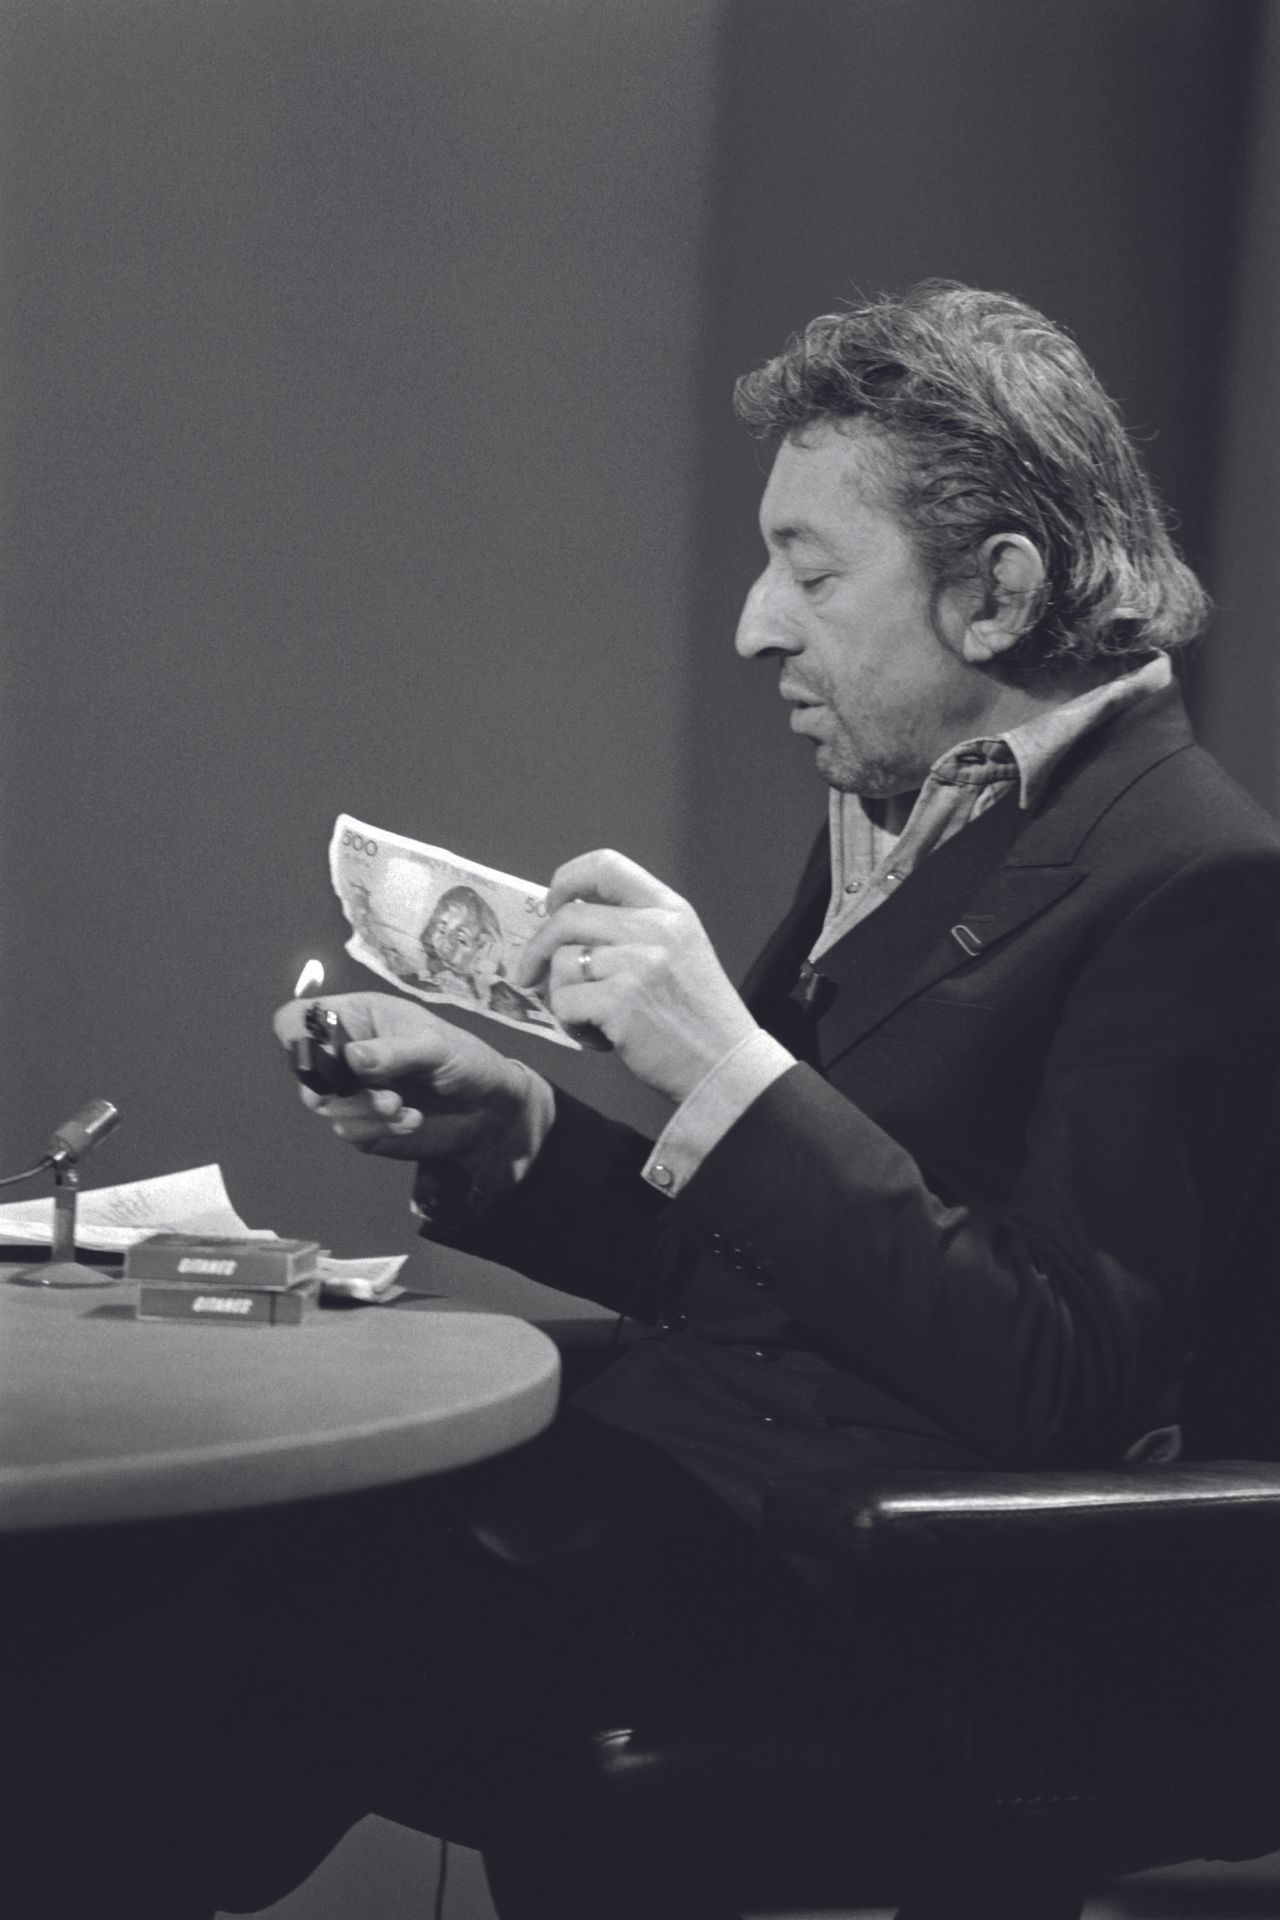 AFP - Philippe WOJAZER AFP - Philippe WOJAZER

Serge Gainsbourg burns a 500-fran&hellip;